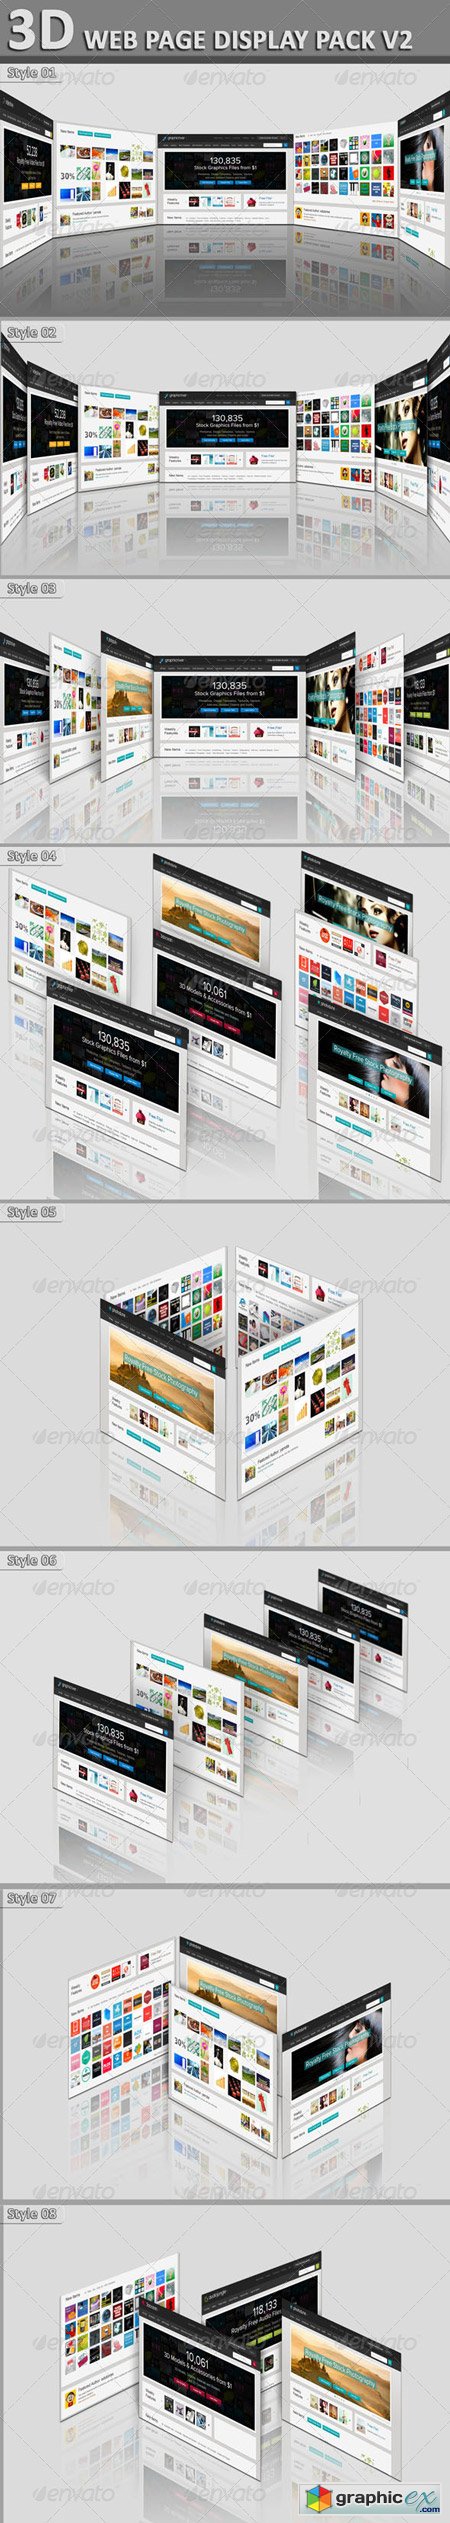 3D Web Page Display Pack V2